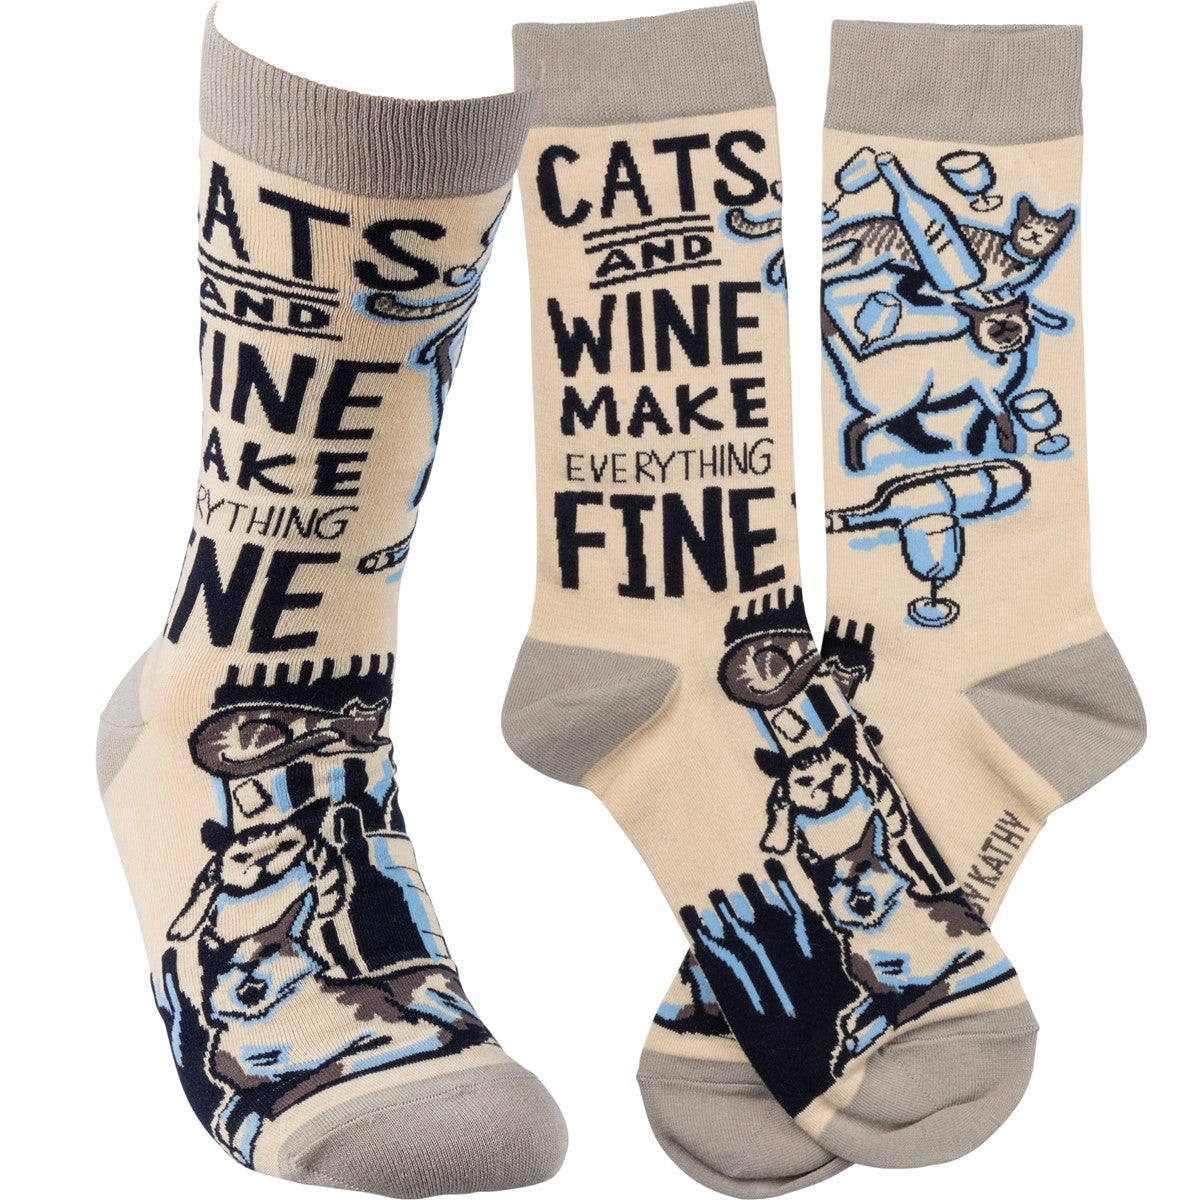 Cats And Wine Make Everything Fine Unisex Fun Socks